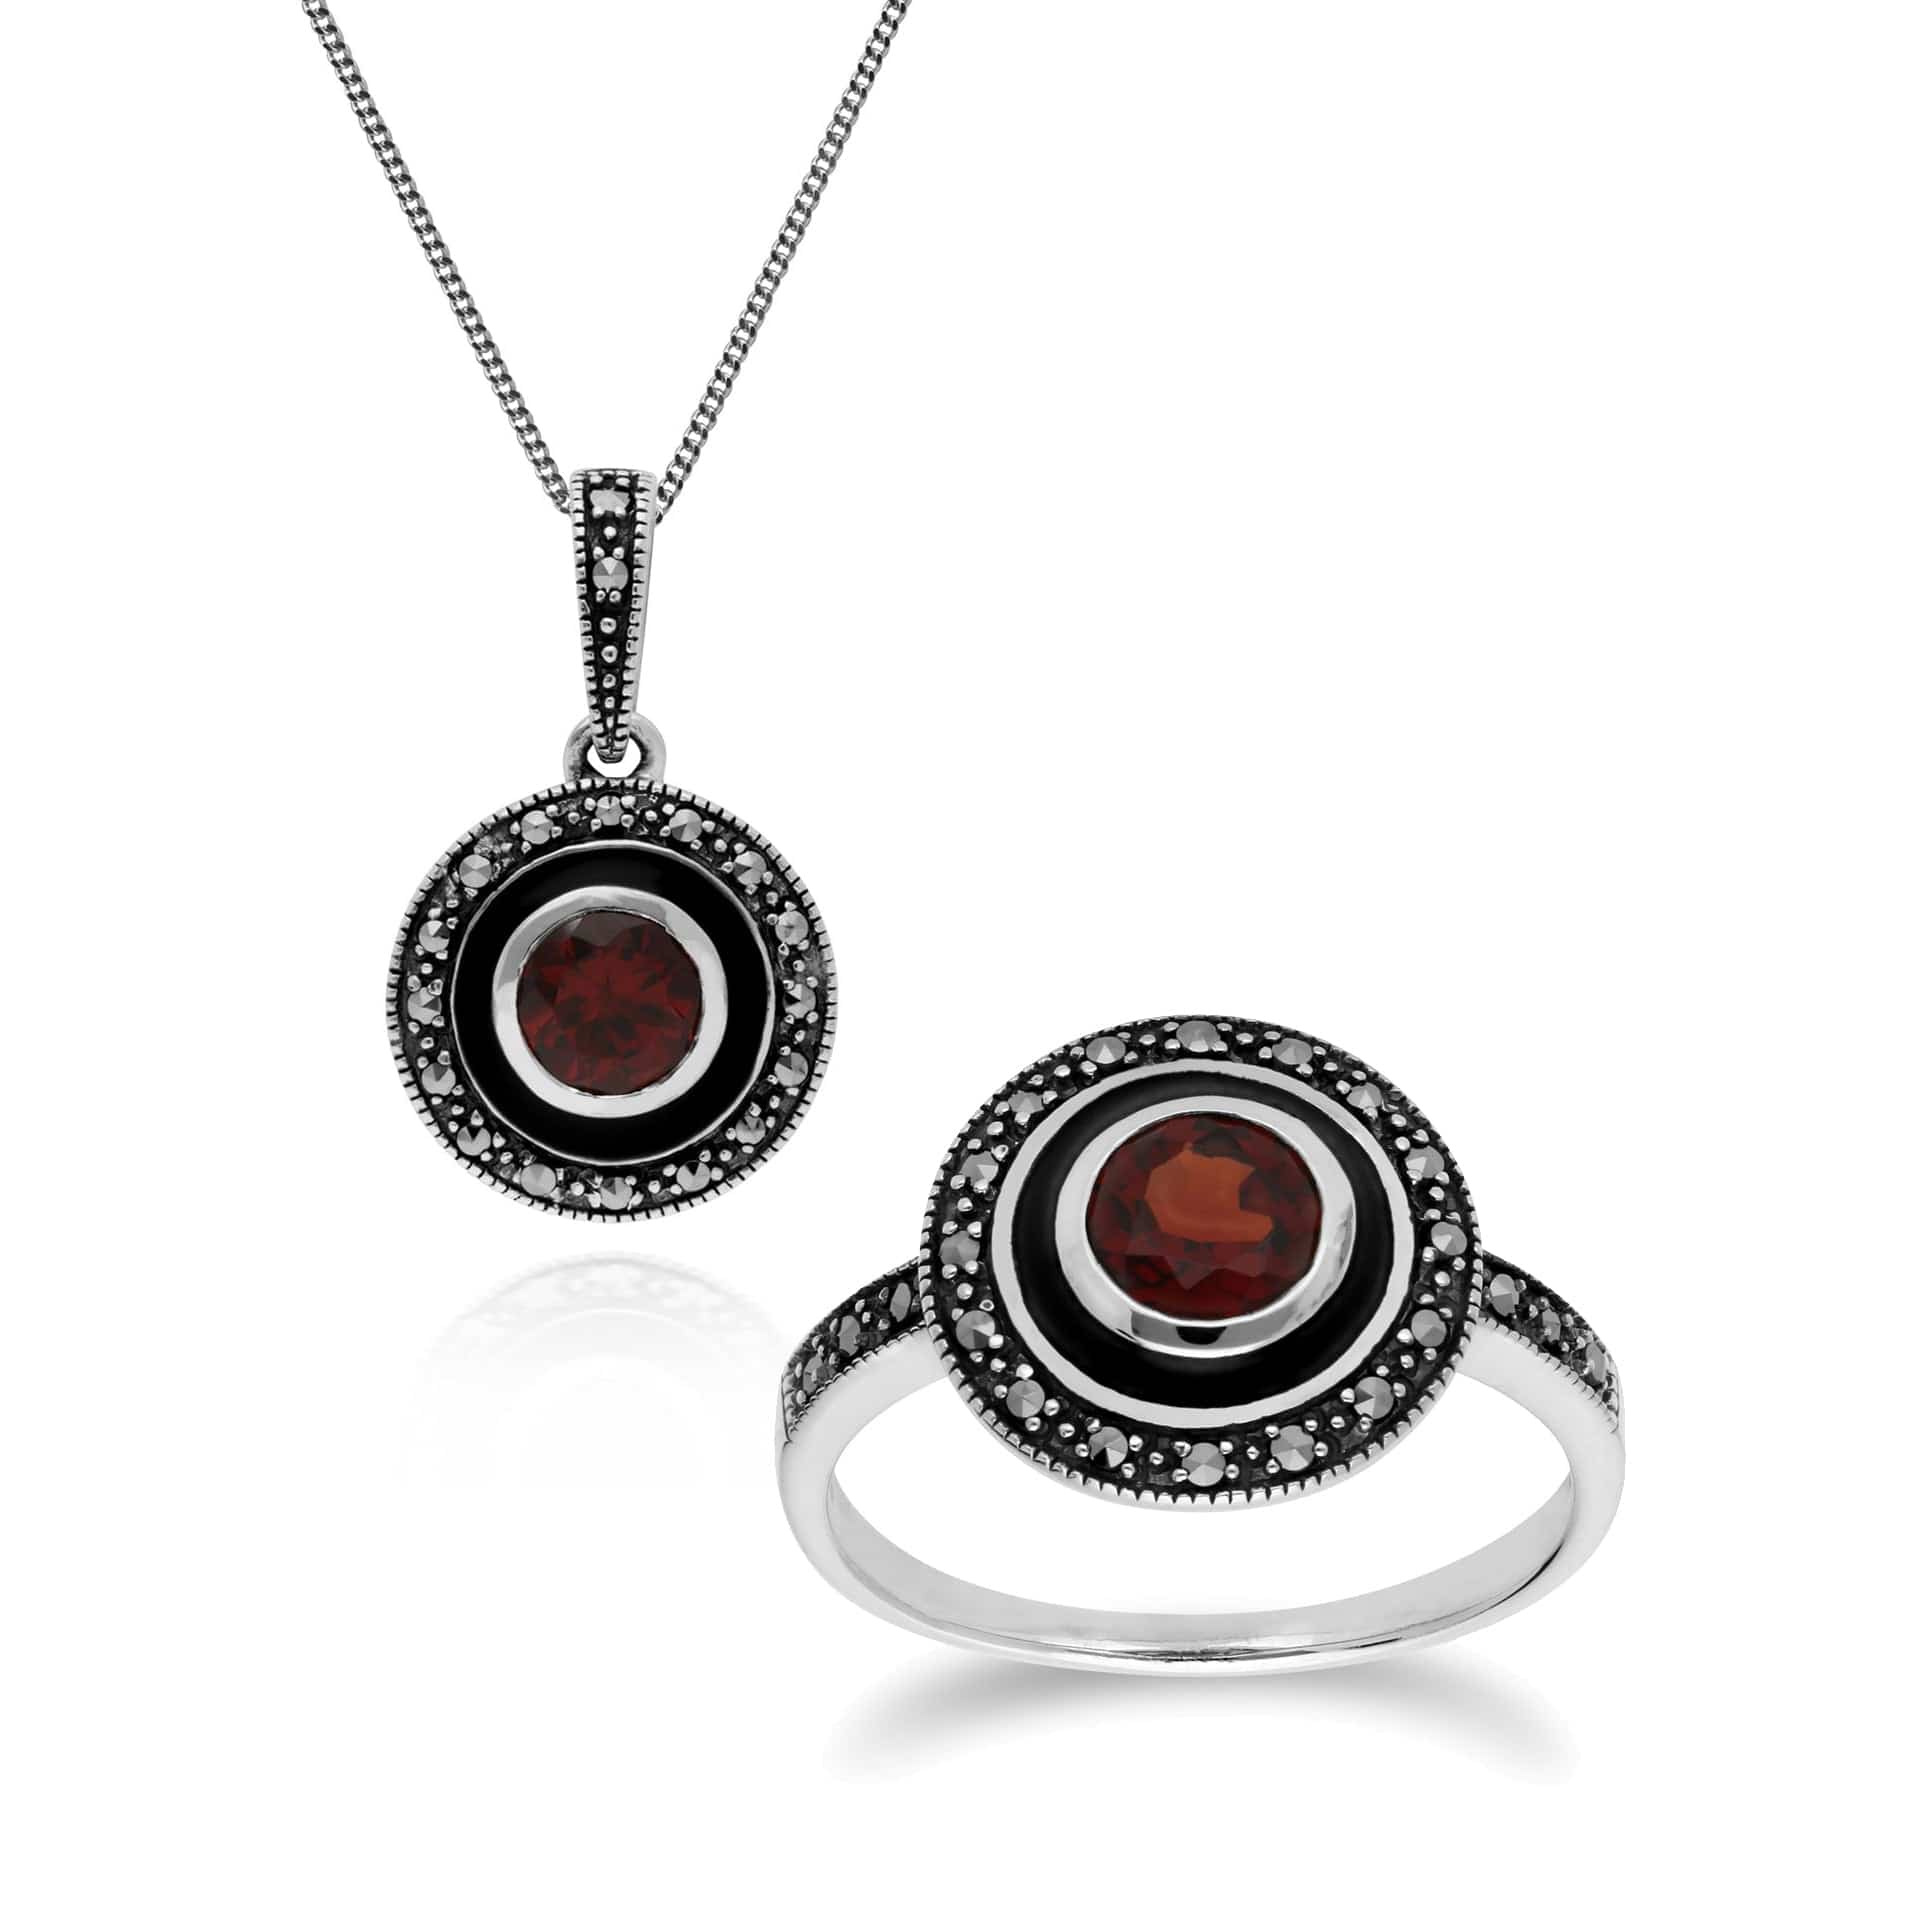 214P301303925-214R599603925 Art Deco Style Round Garnet, Marcasite & Black Enamel Pendant & Ring Set in 925 Sterling Silver 1